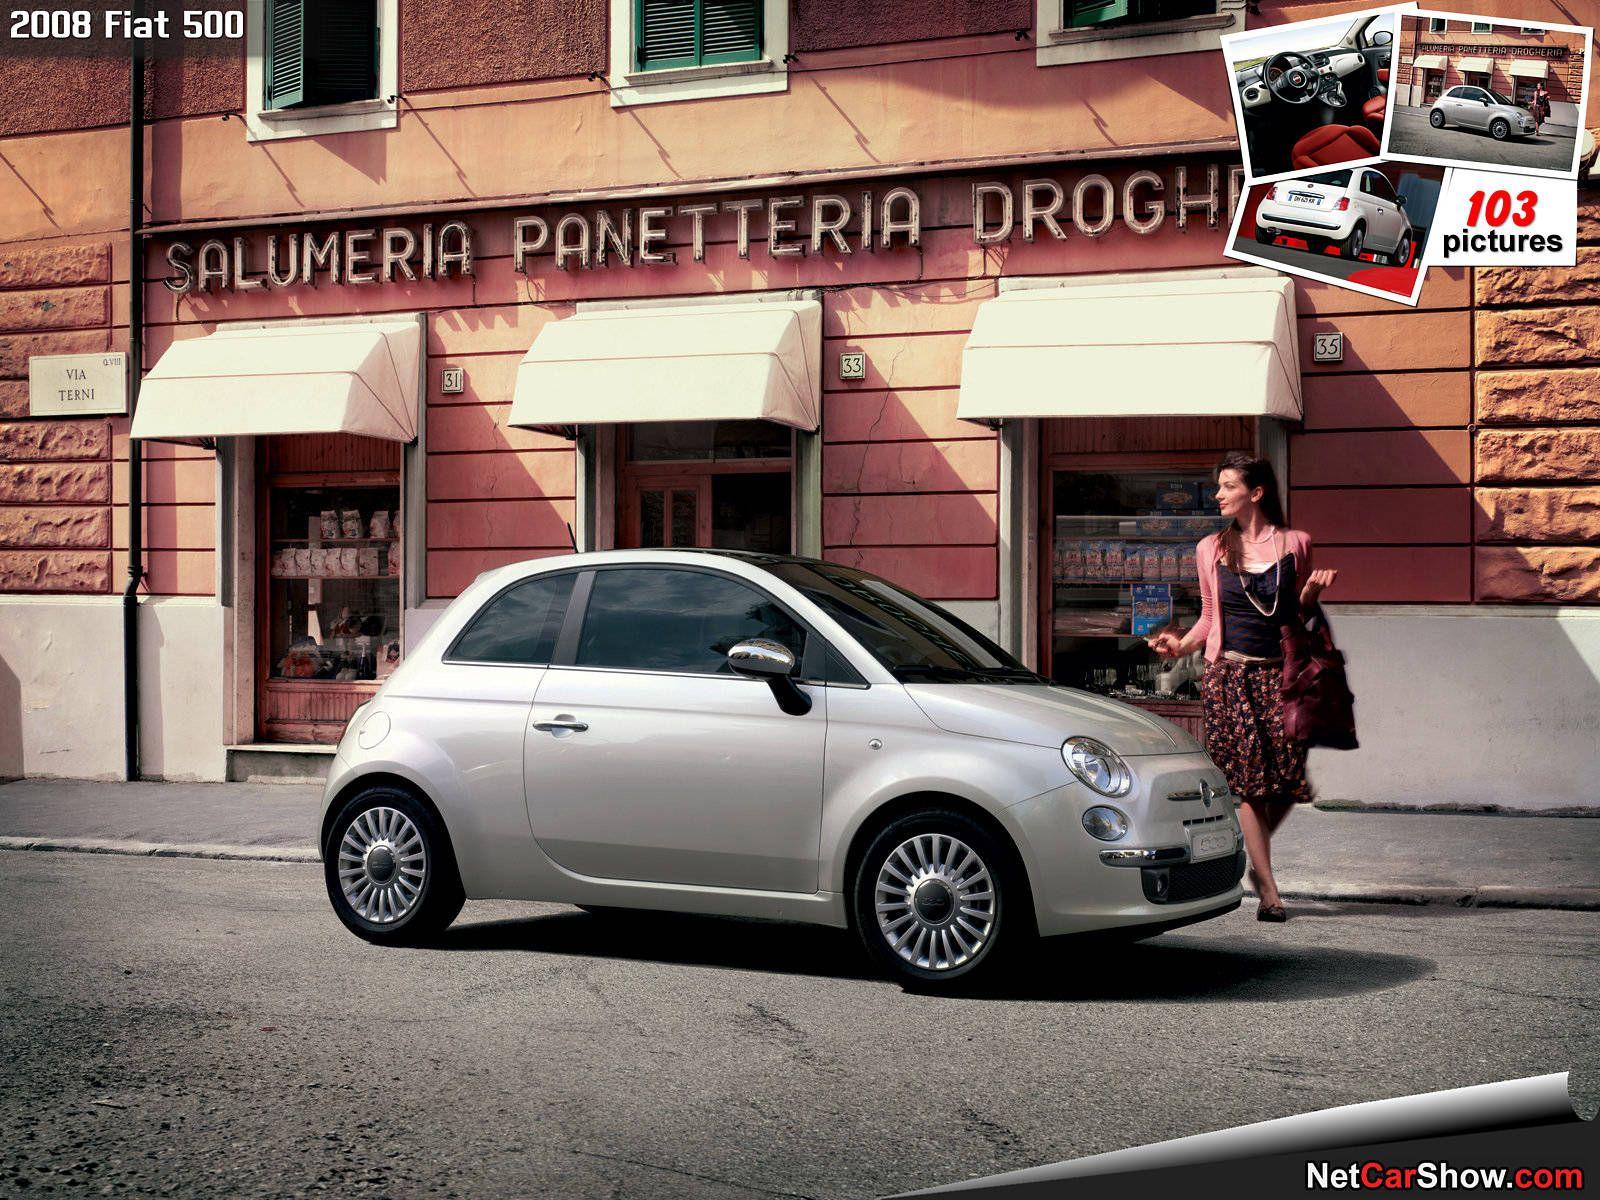 Fiat 500 wallpaper thread